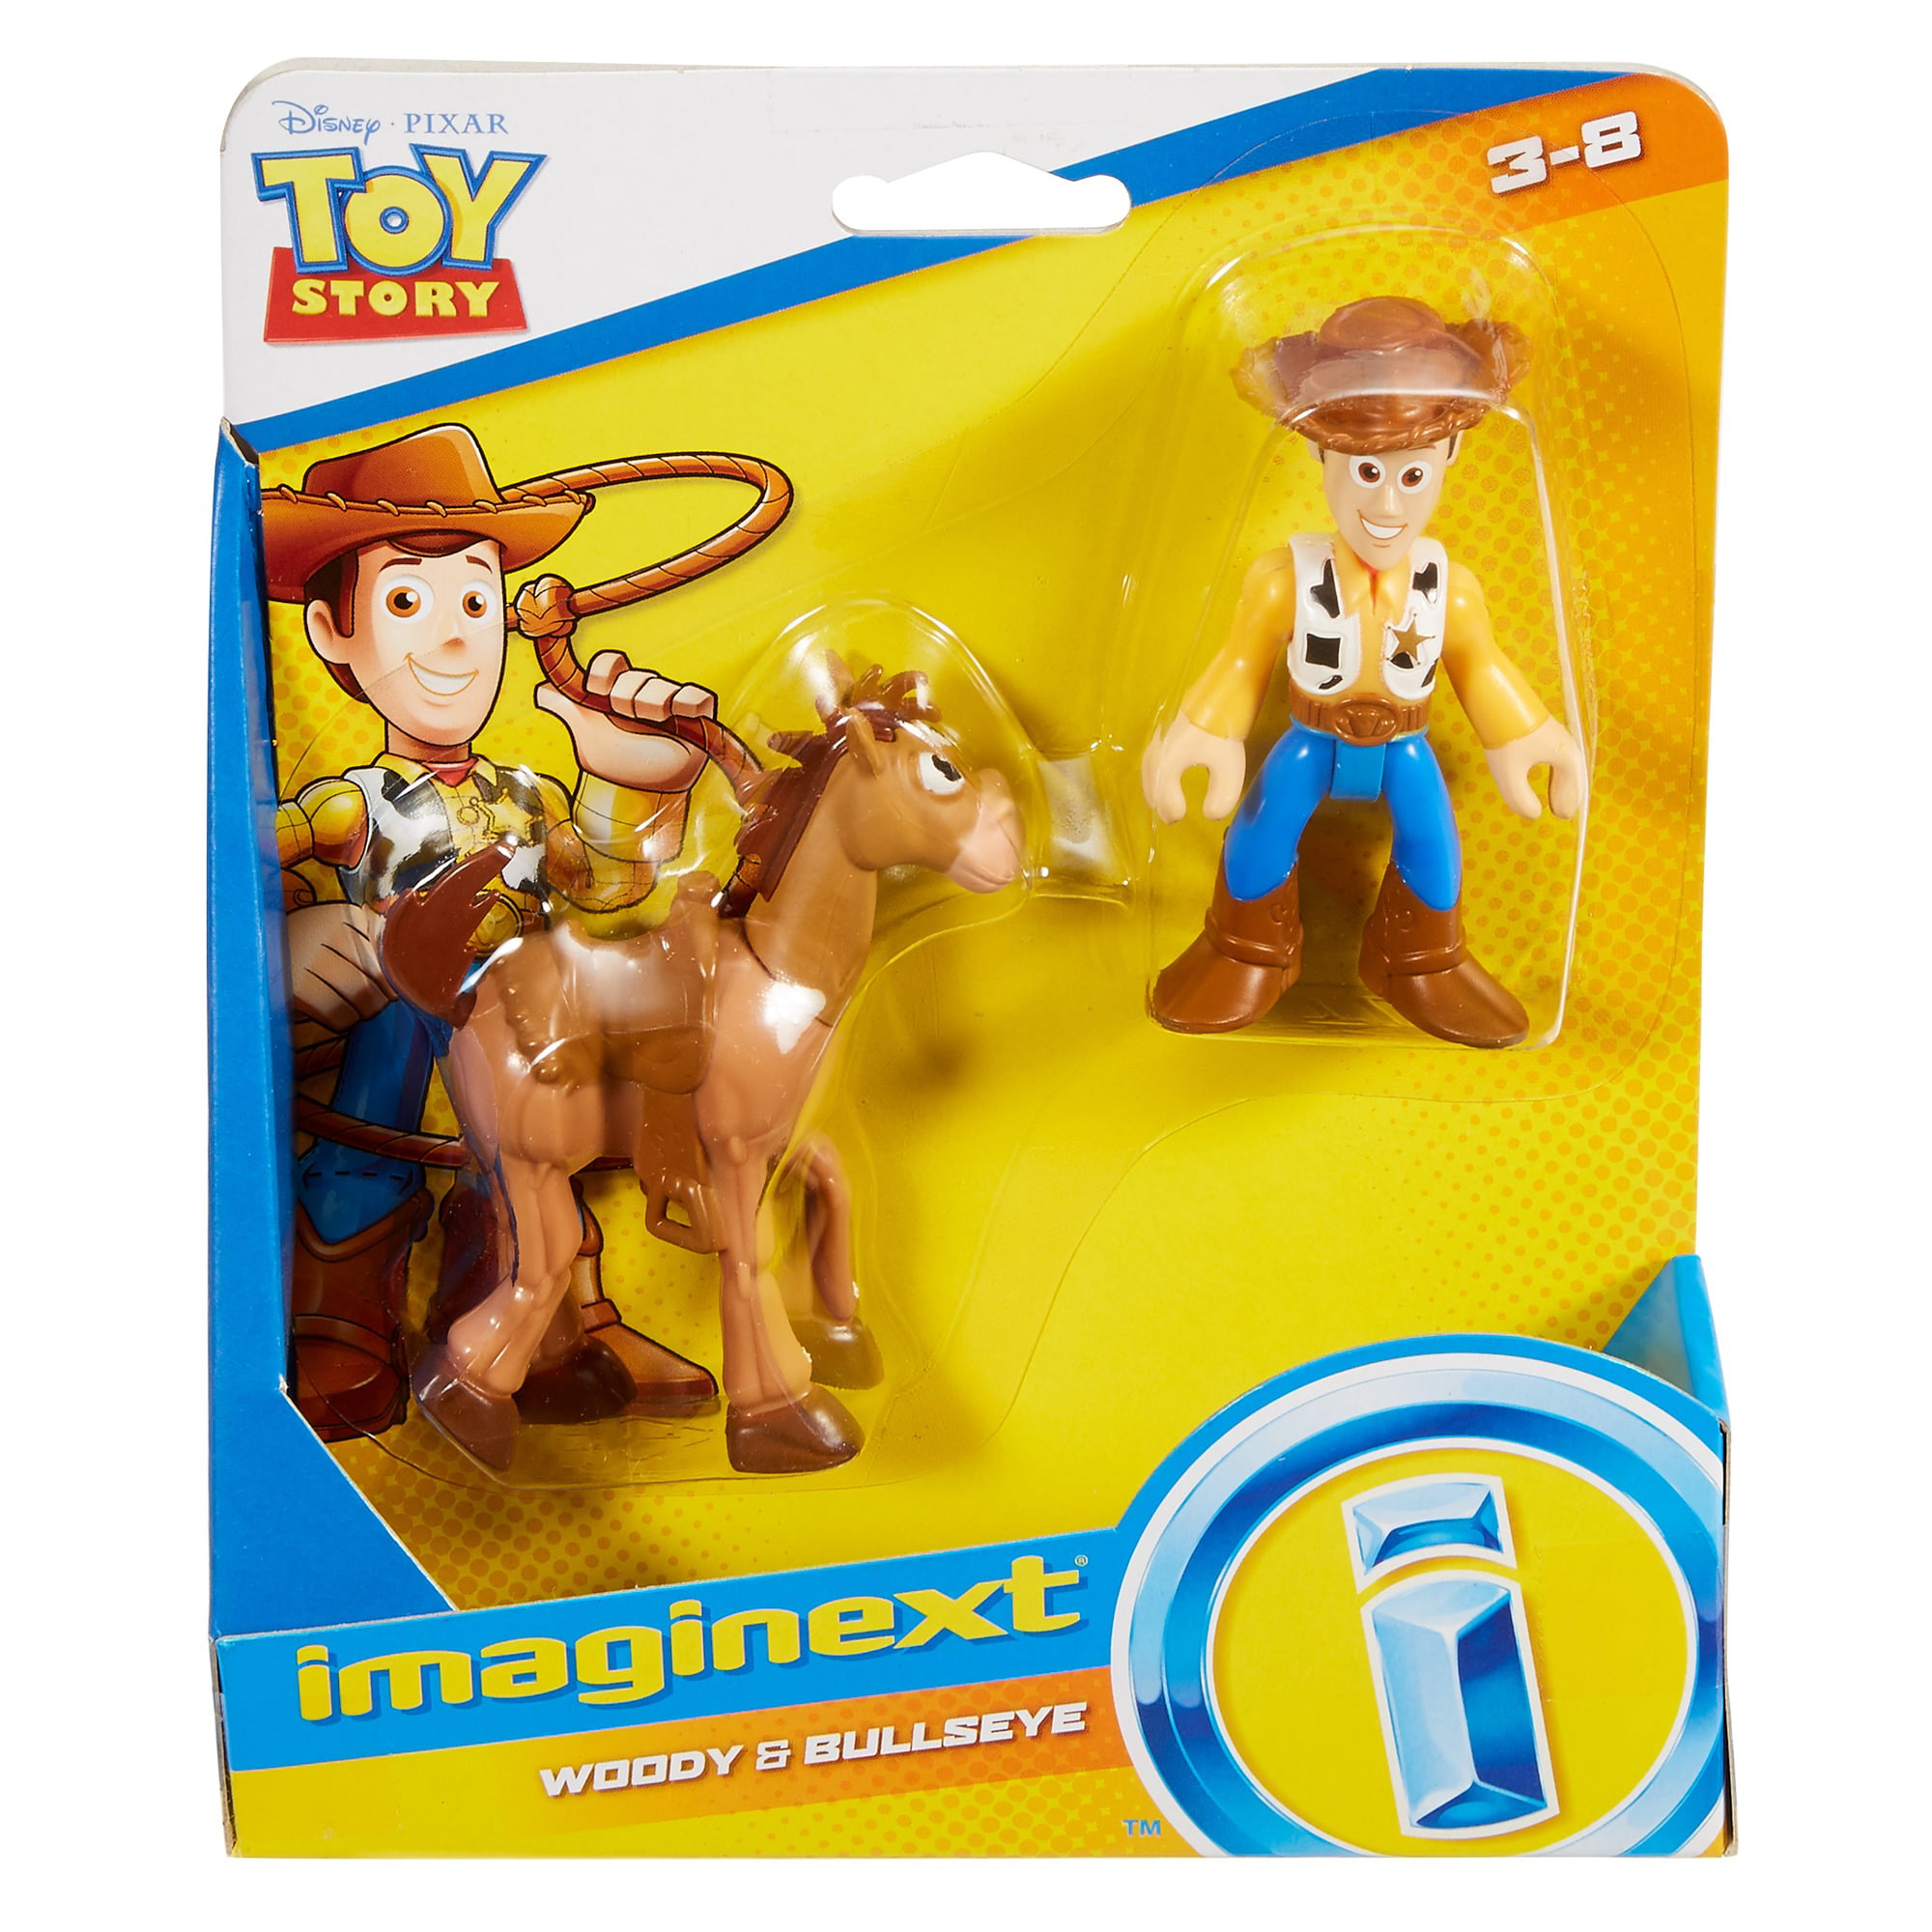 NEW Disney Pixar Toy Story 4 Imaginext Woody & Bullseye Figure Pack 